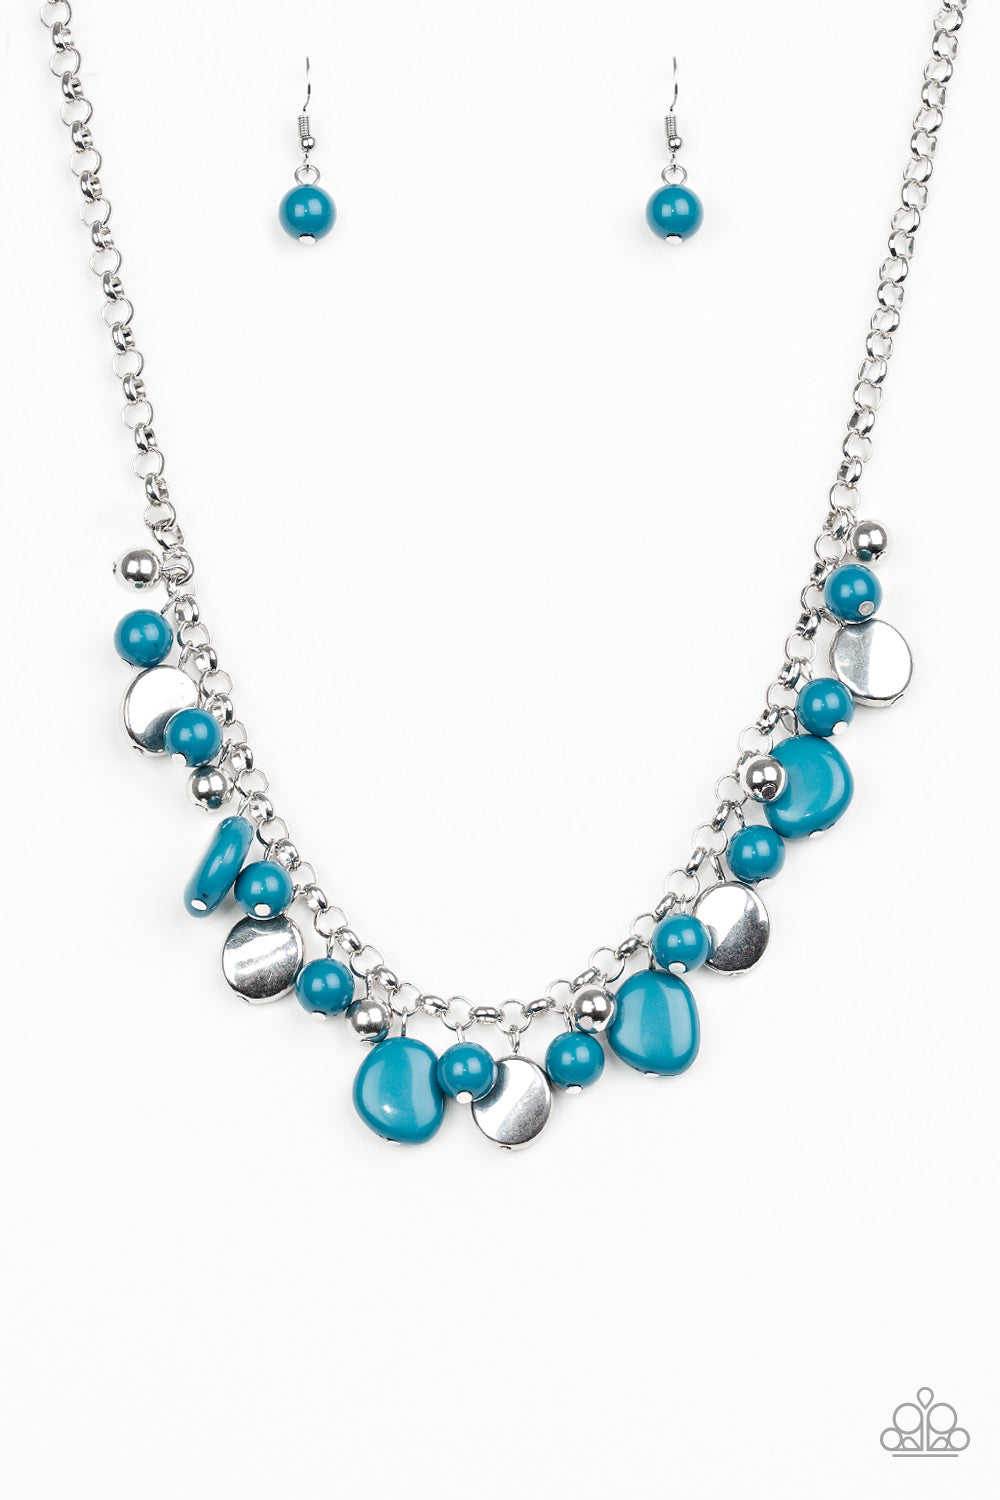 Flirtatiously Florida - Paparazzi - Blue and Silver Bead Necklace